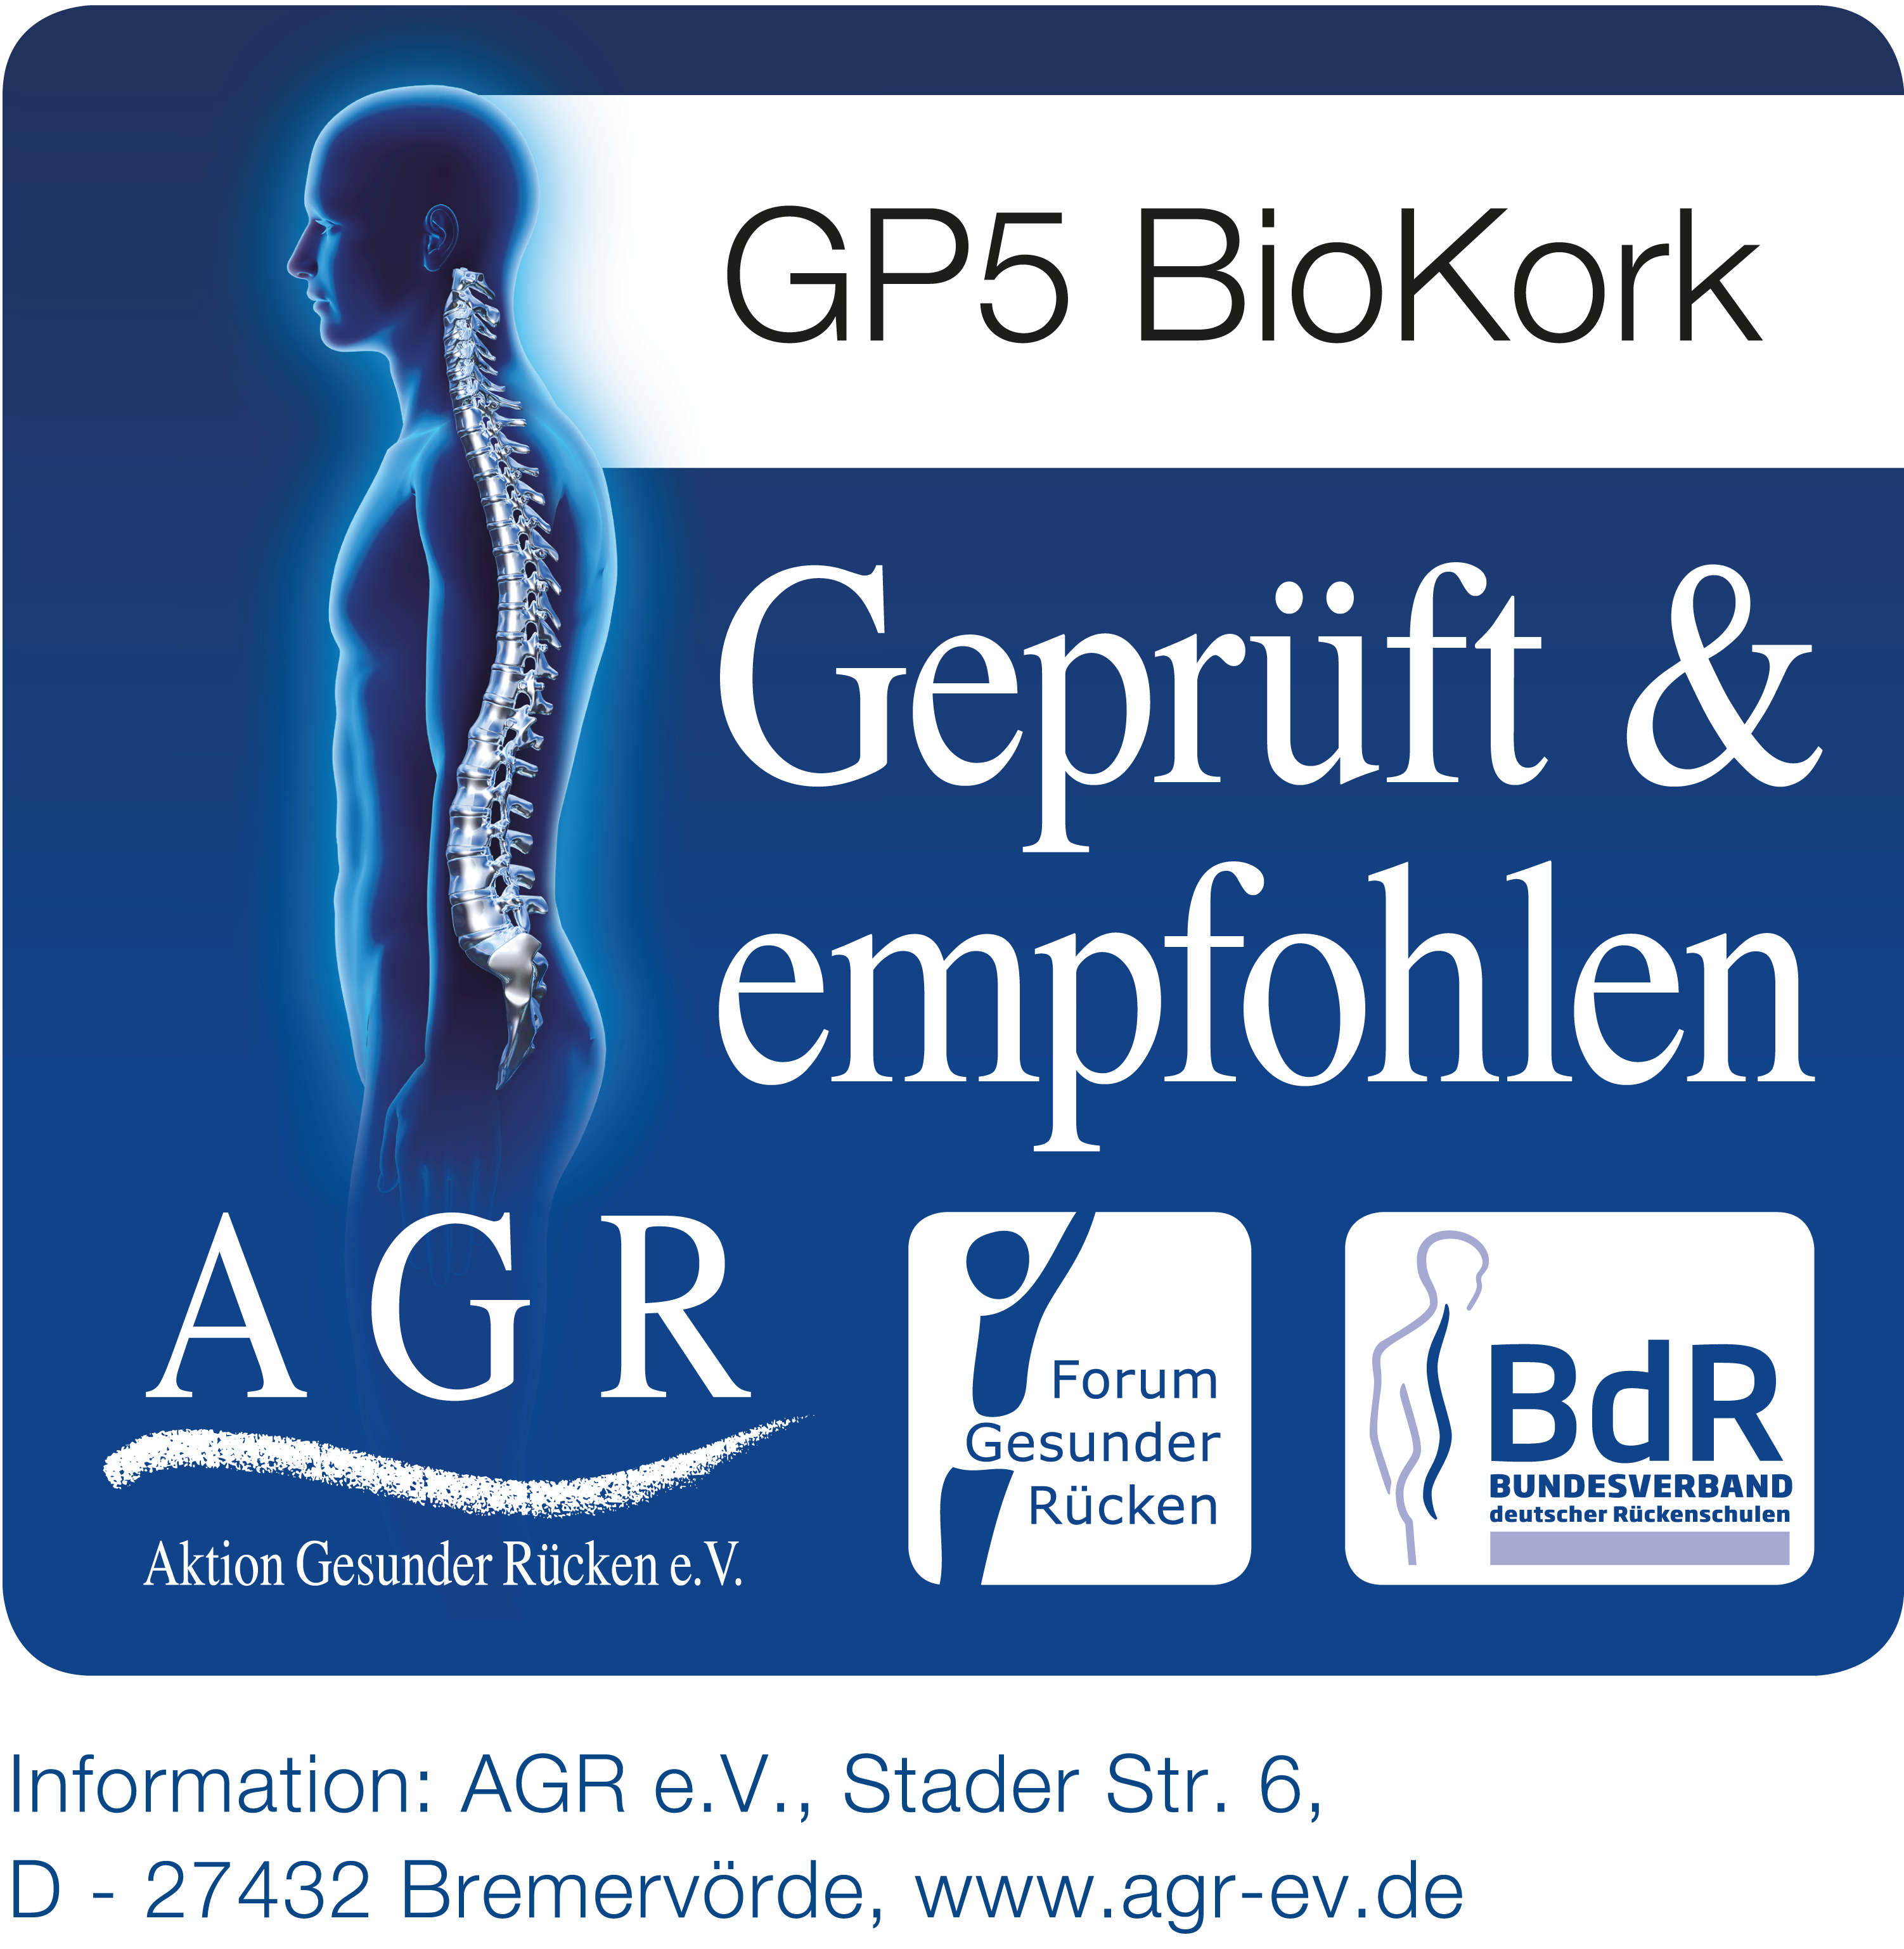 AGR Quality label for the Ergon grip GP5